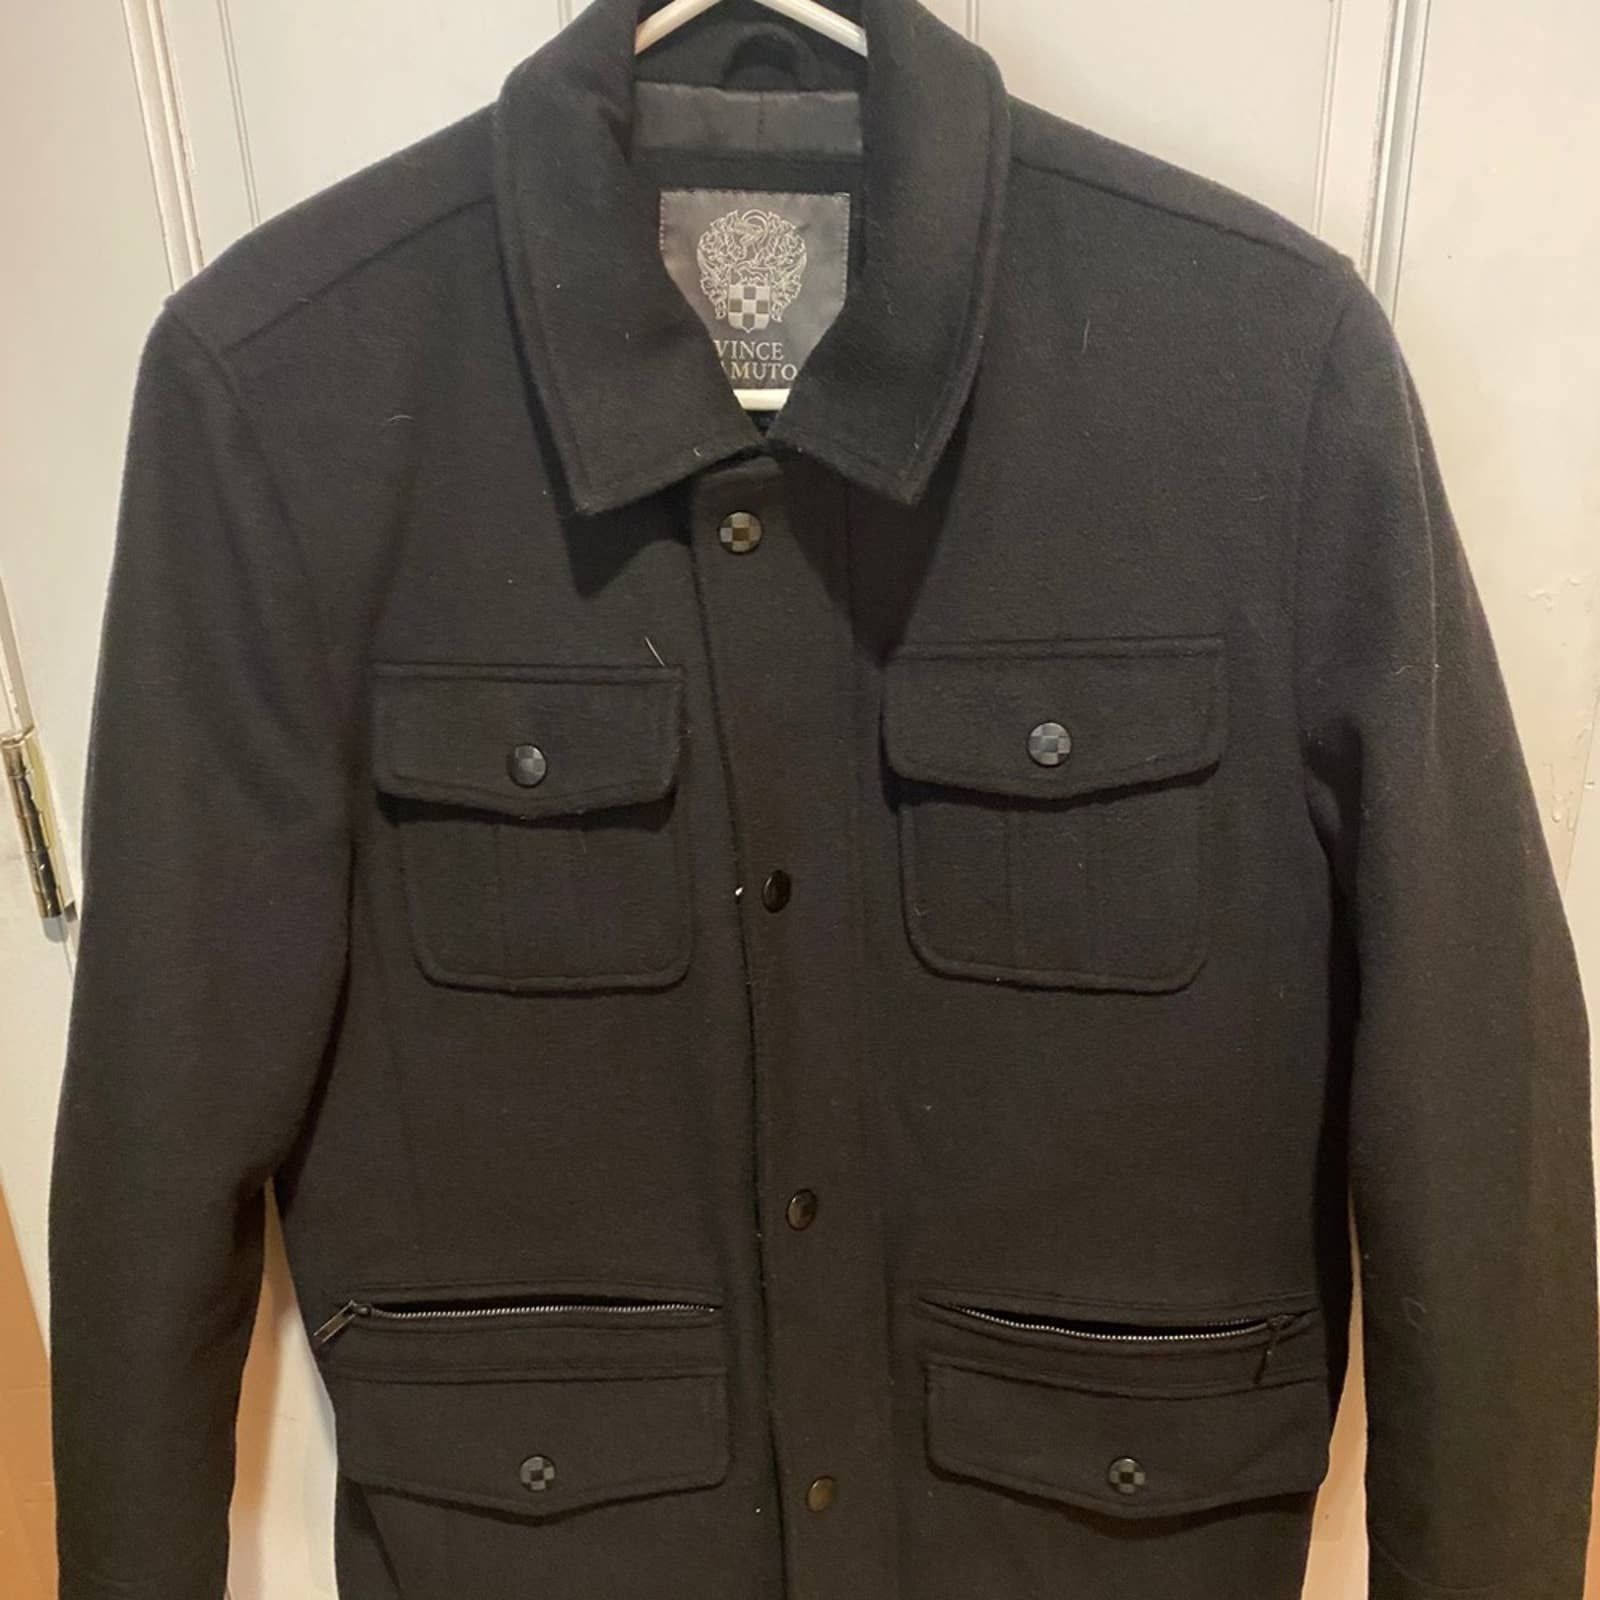 Vince Camuto Vince Camuto Black Zip Up Jacket / Coat Size Medium Size US M / EU 48-50 / 2 - 1 Preview